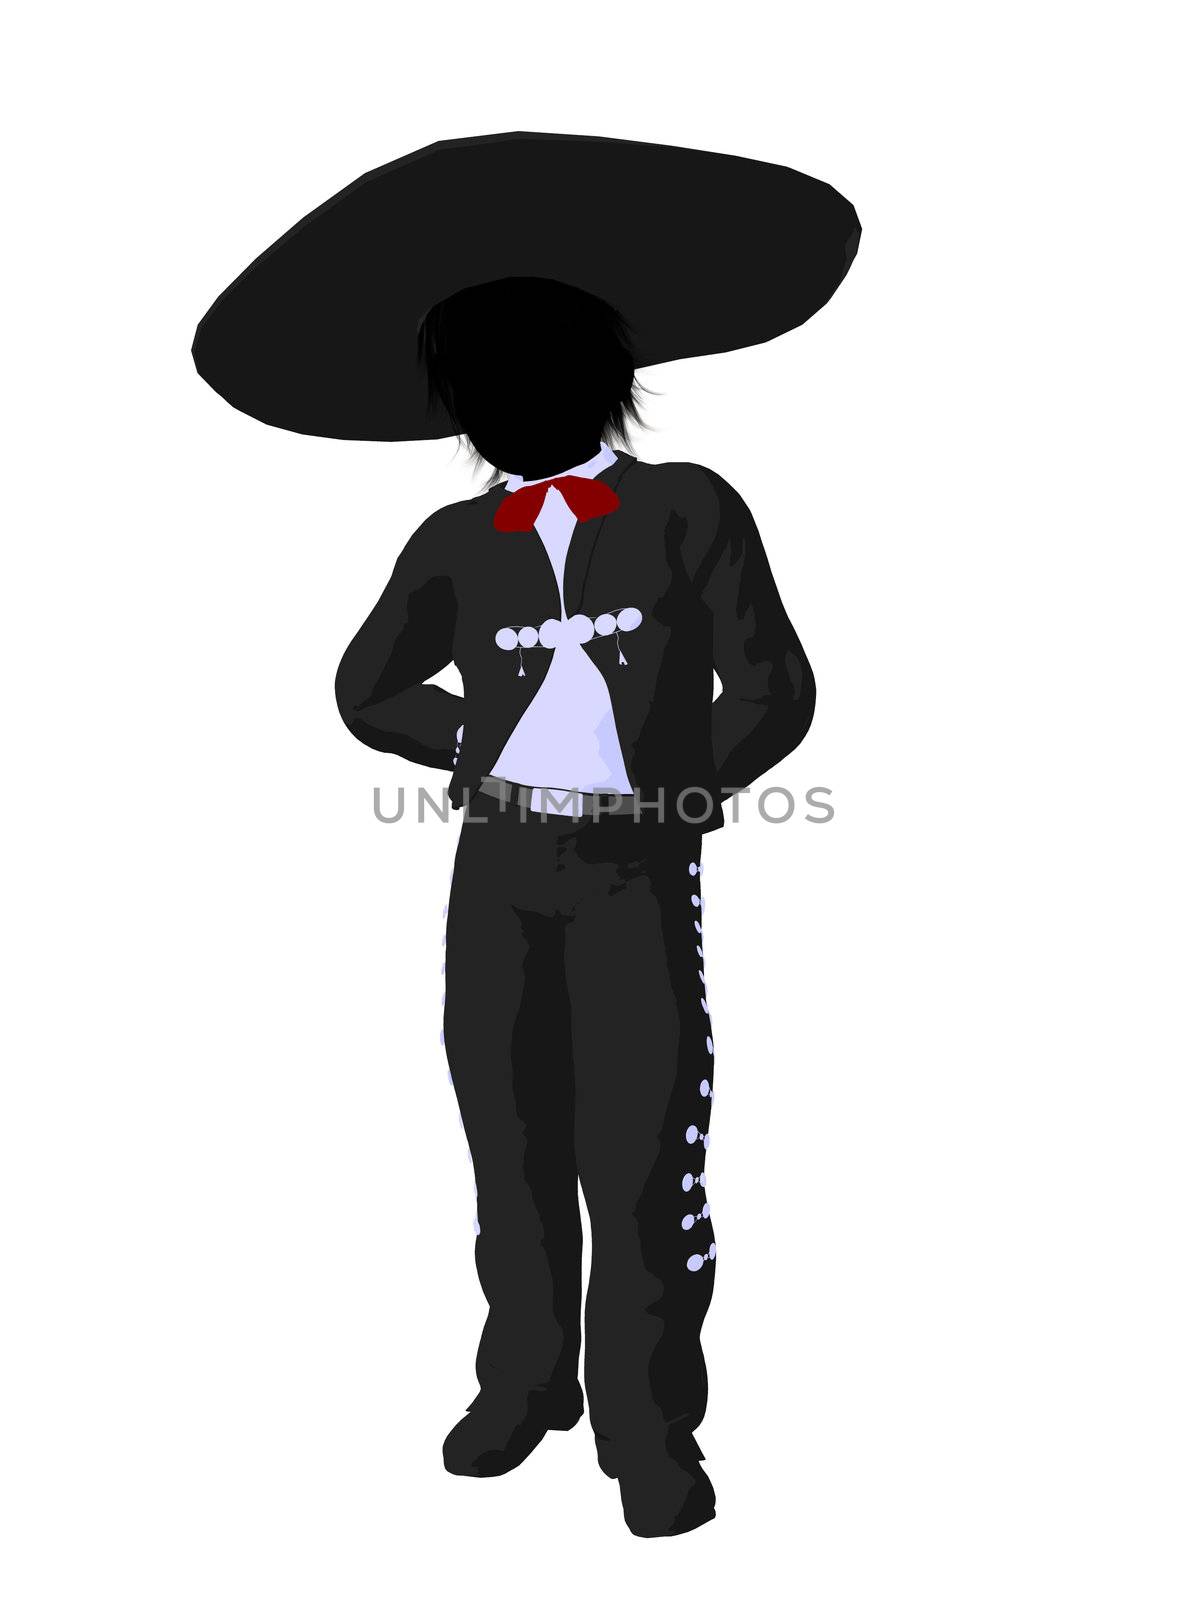 Mariachi boy illustration silhouette illustration on a white background